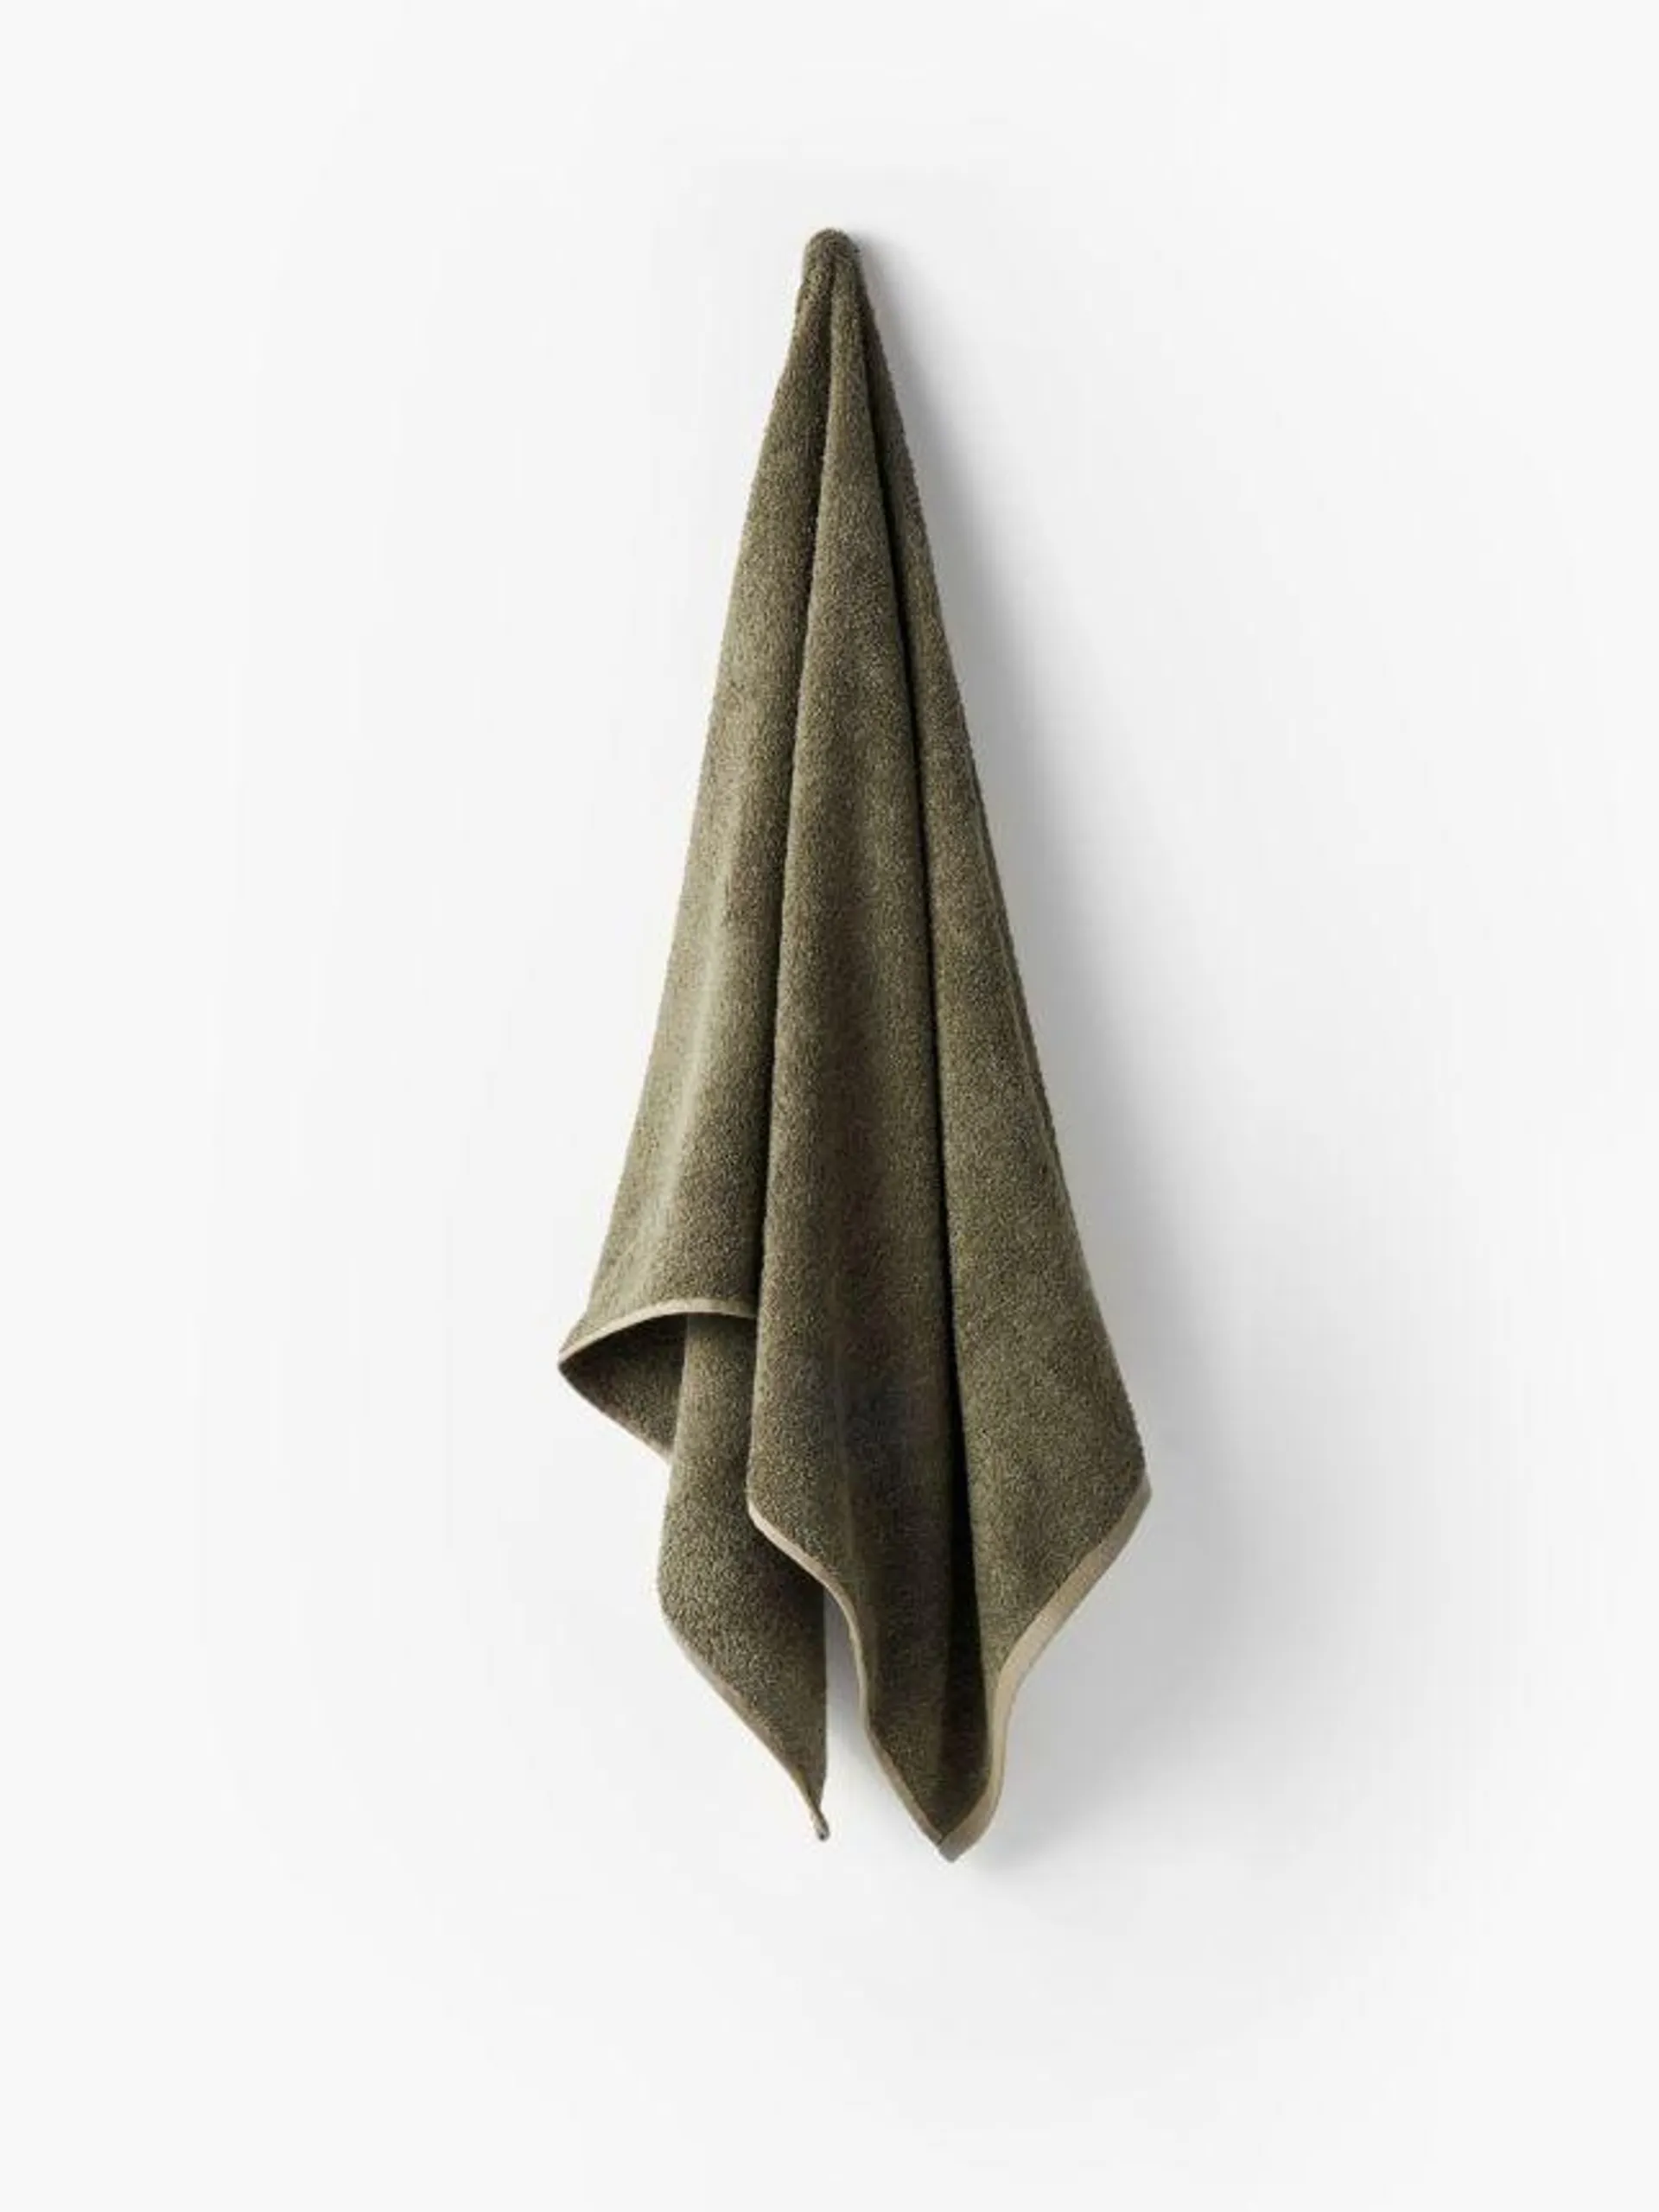 Nara Cotton/Bamboo Moss Towel Collection